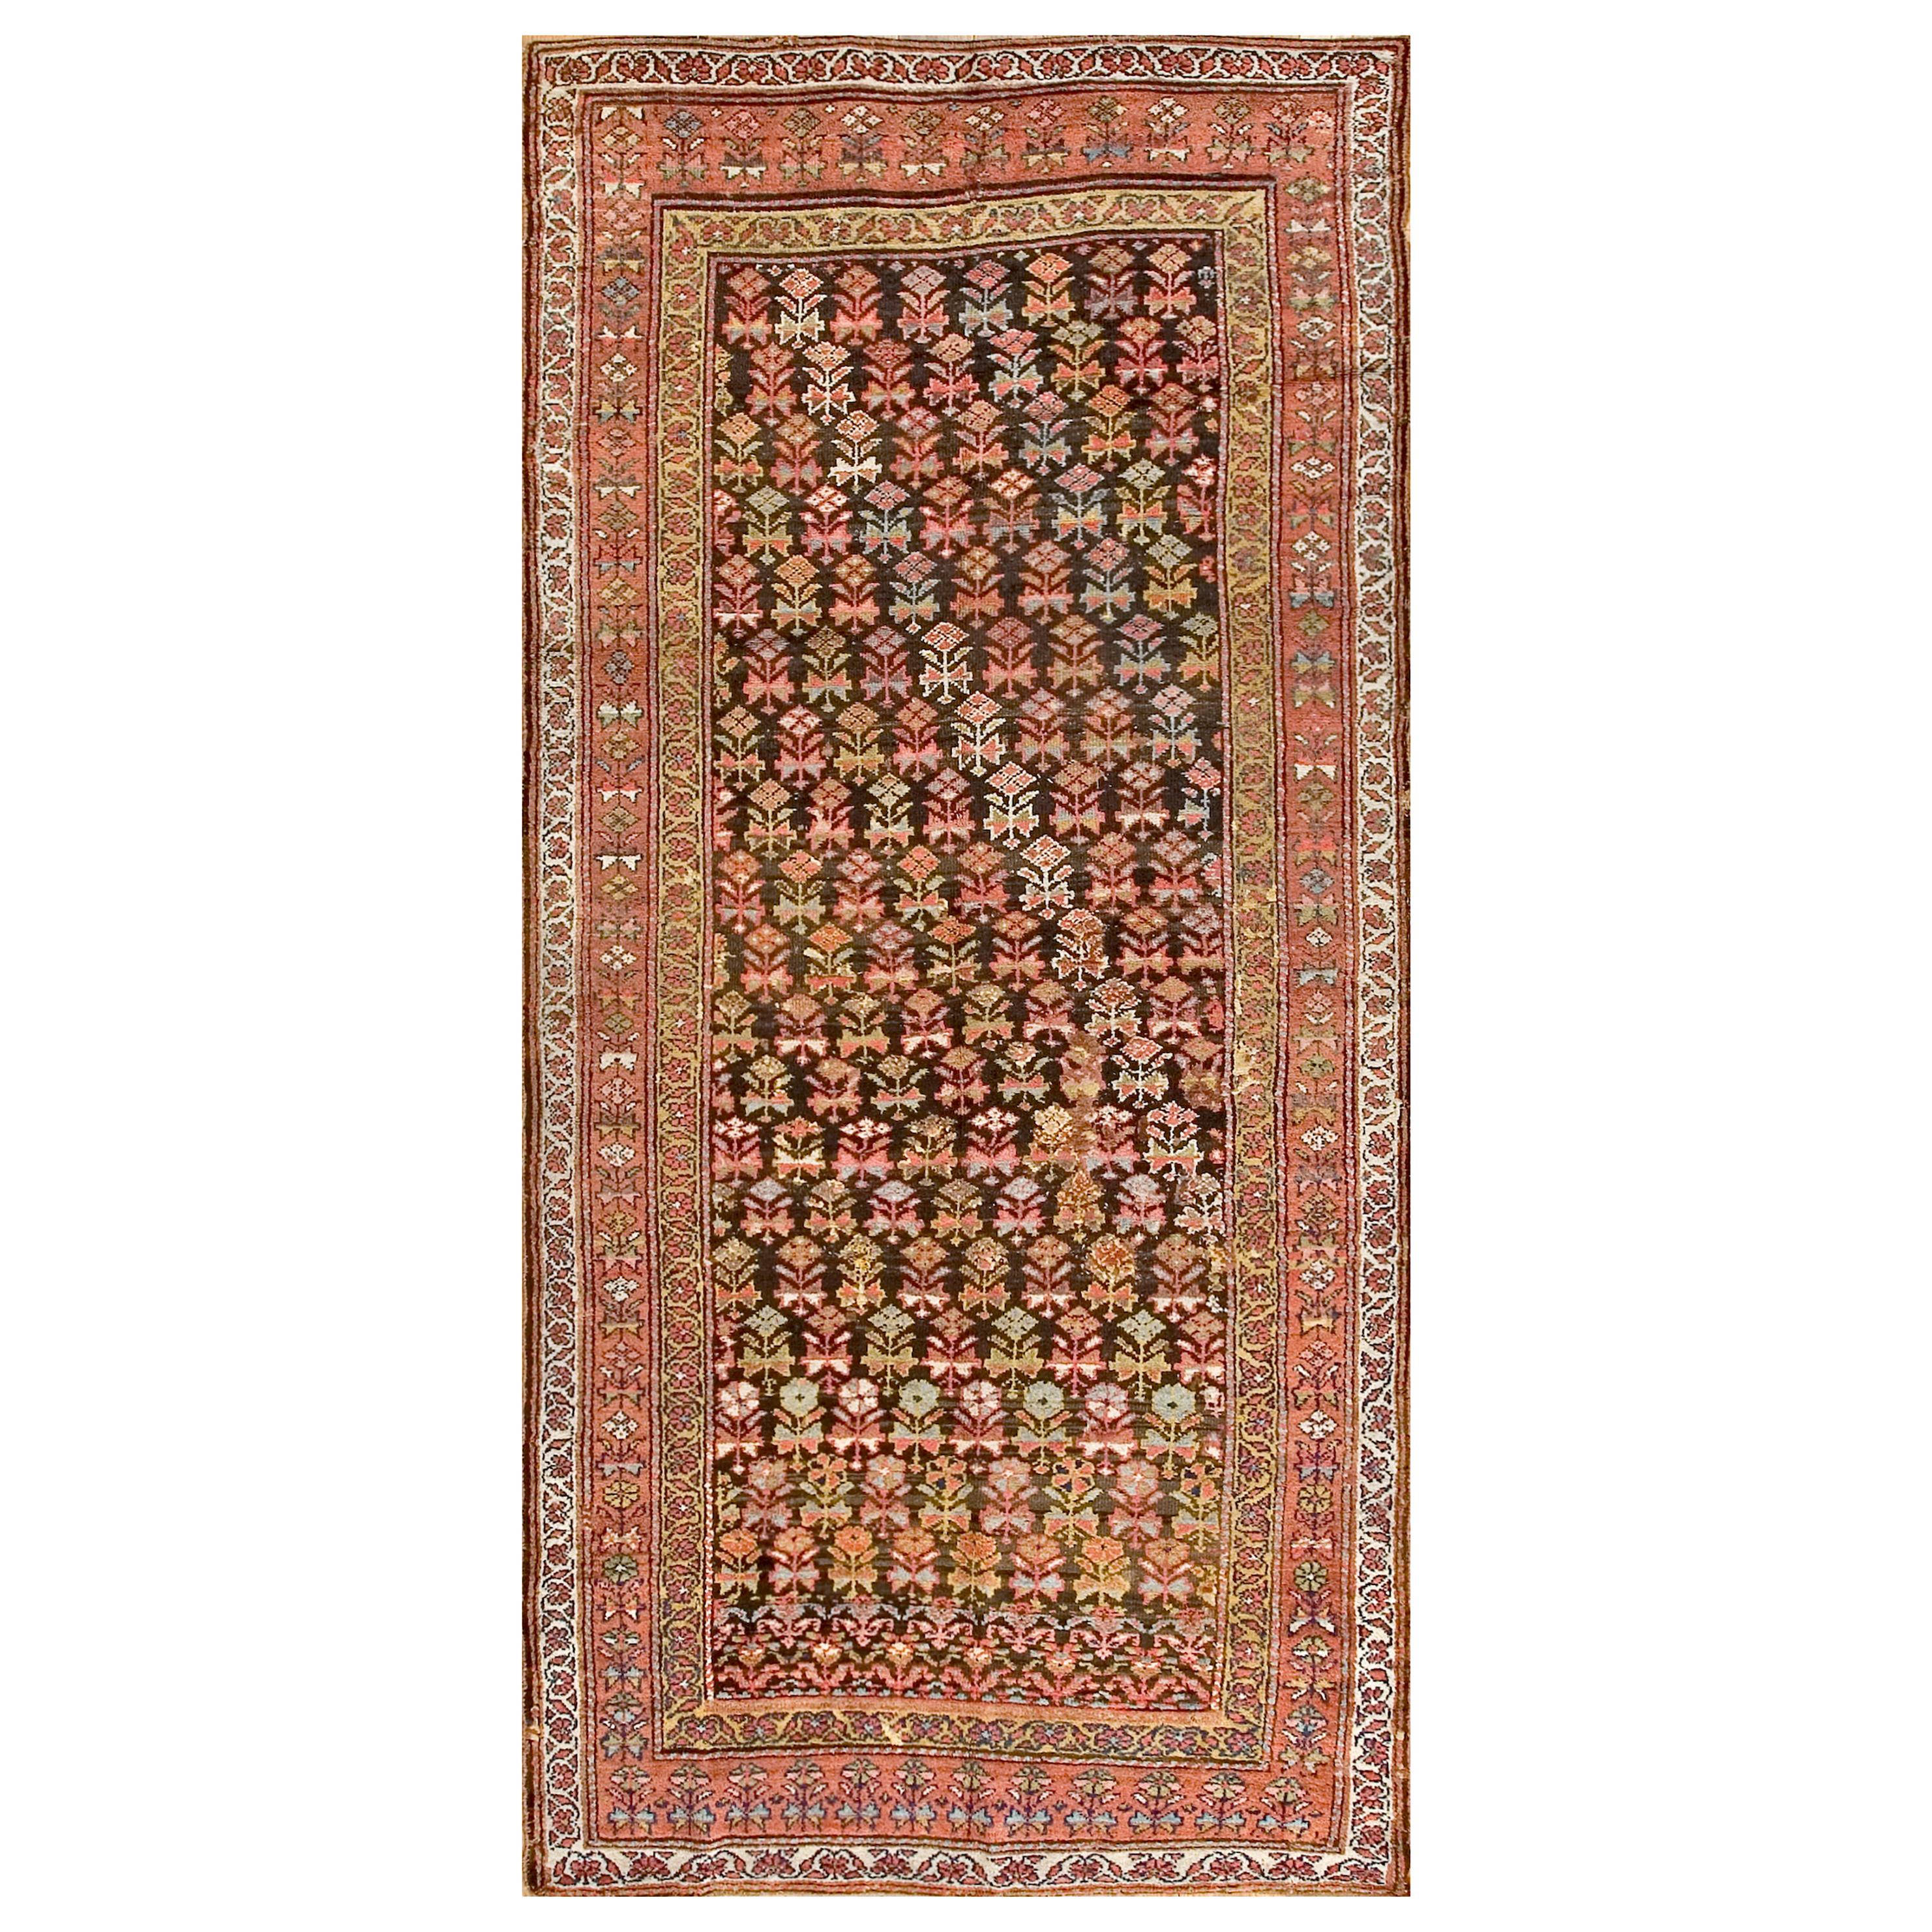 Early 20th Century Persian Kurdish Carpet ( 5' x 10'6" - 152 x 320 )